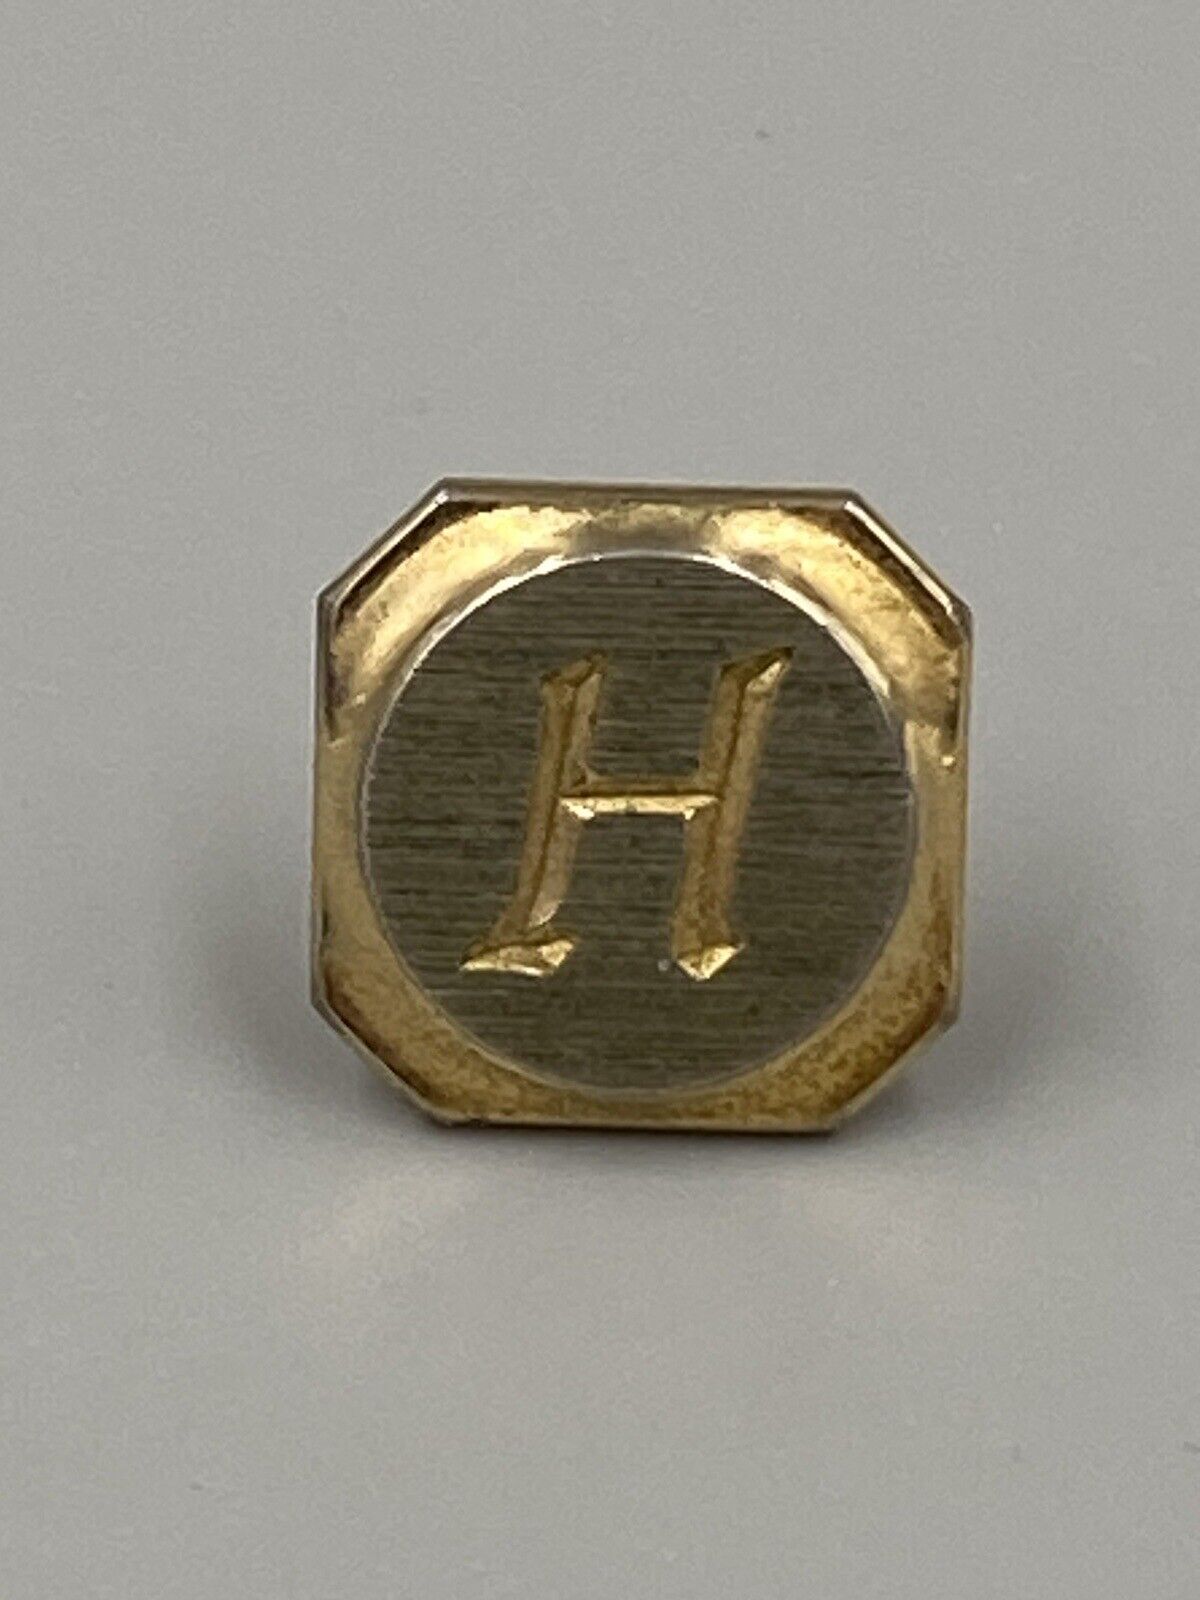 H Monogram Initial Letter Vintage Tie Tack Lapel Pin